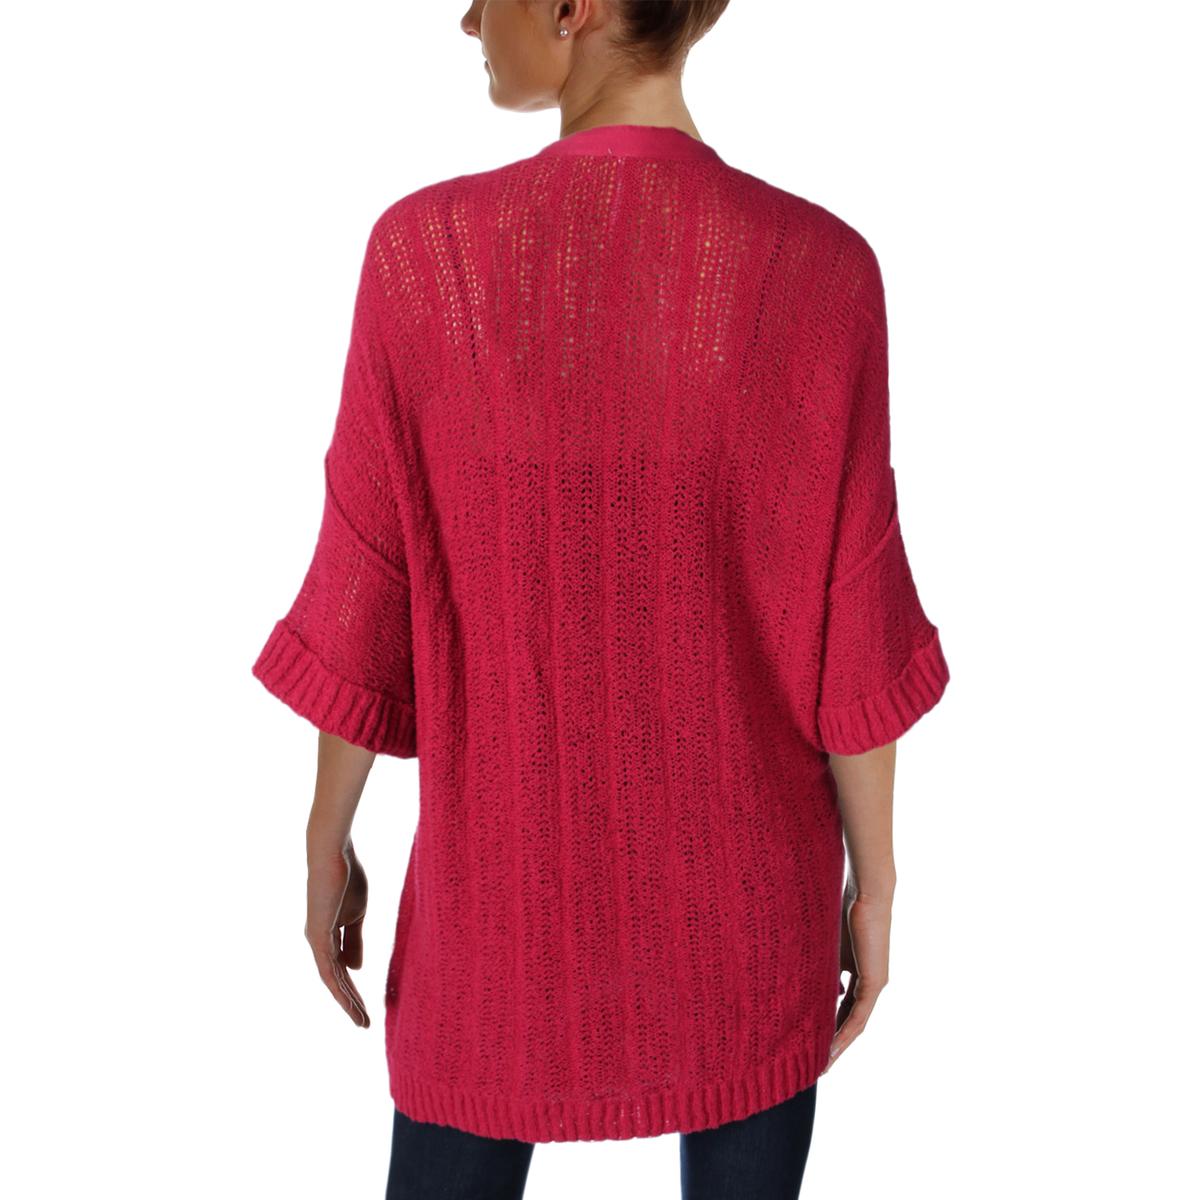 Free People Womens Pink Knit Short Sleeves Cardigan Sweater XS BHFO ...